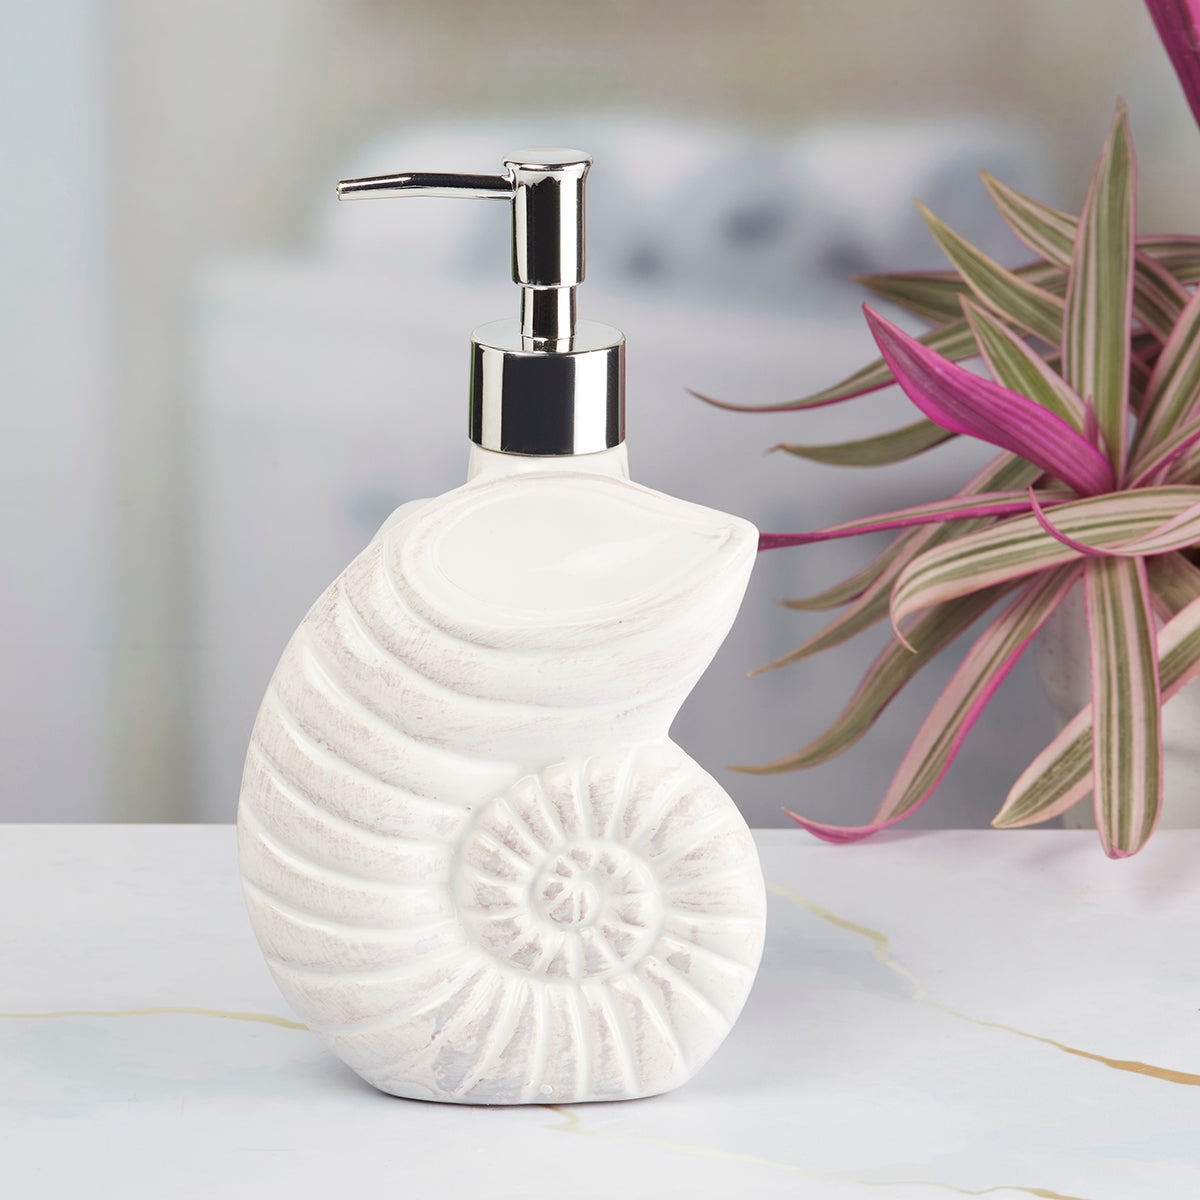 Ceramic Soap Dispenser handwash Pump for Bathroom, Set of 1, White (7964)